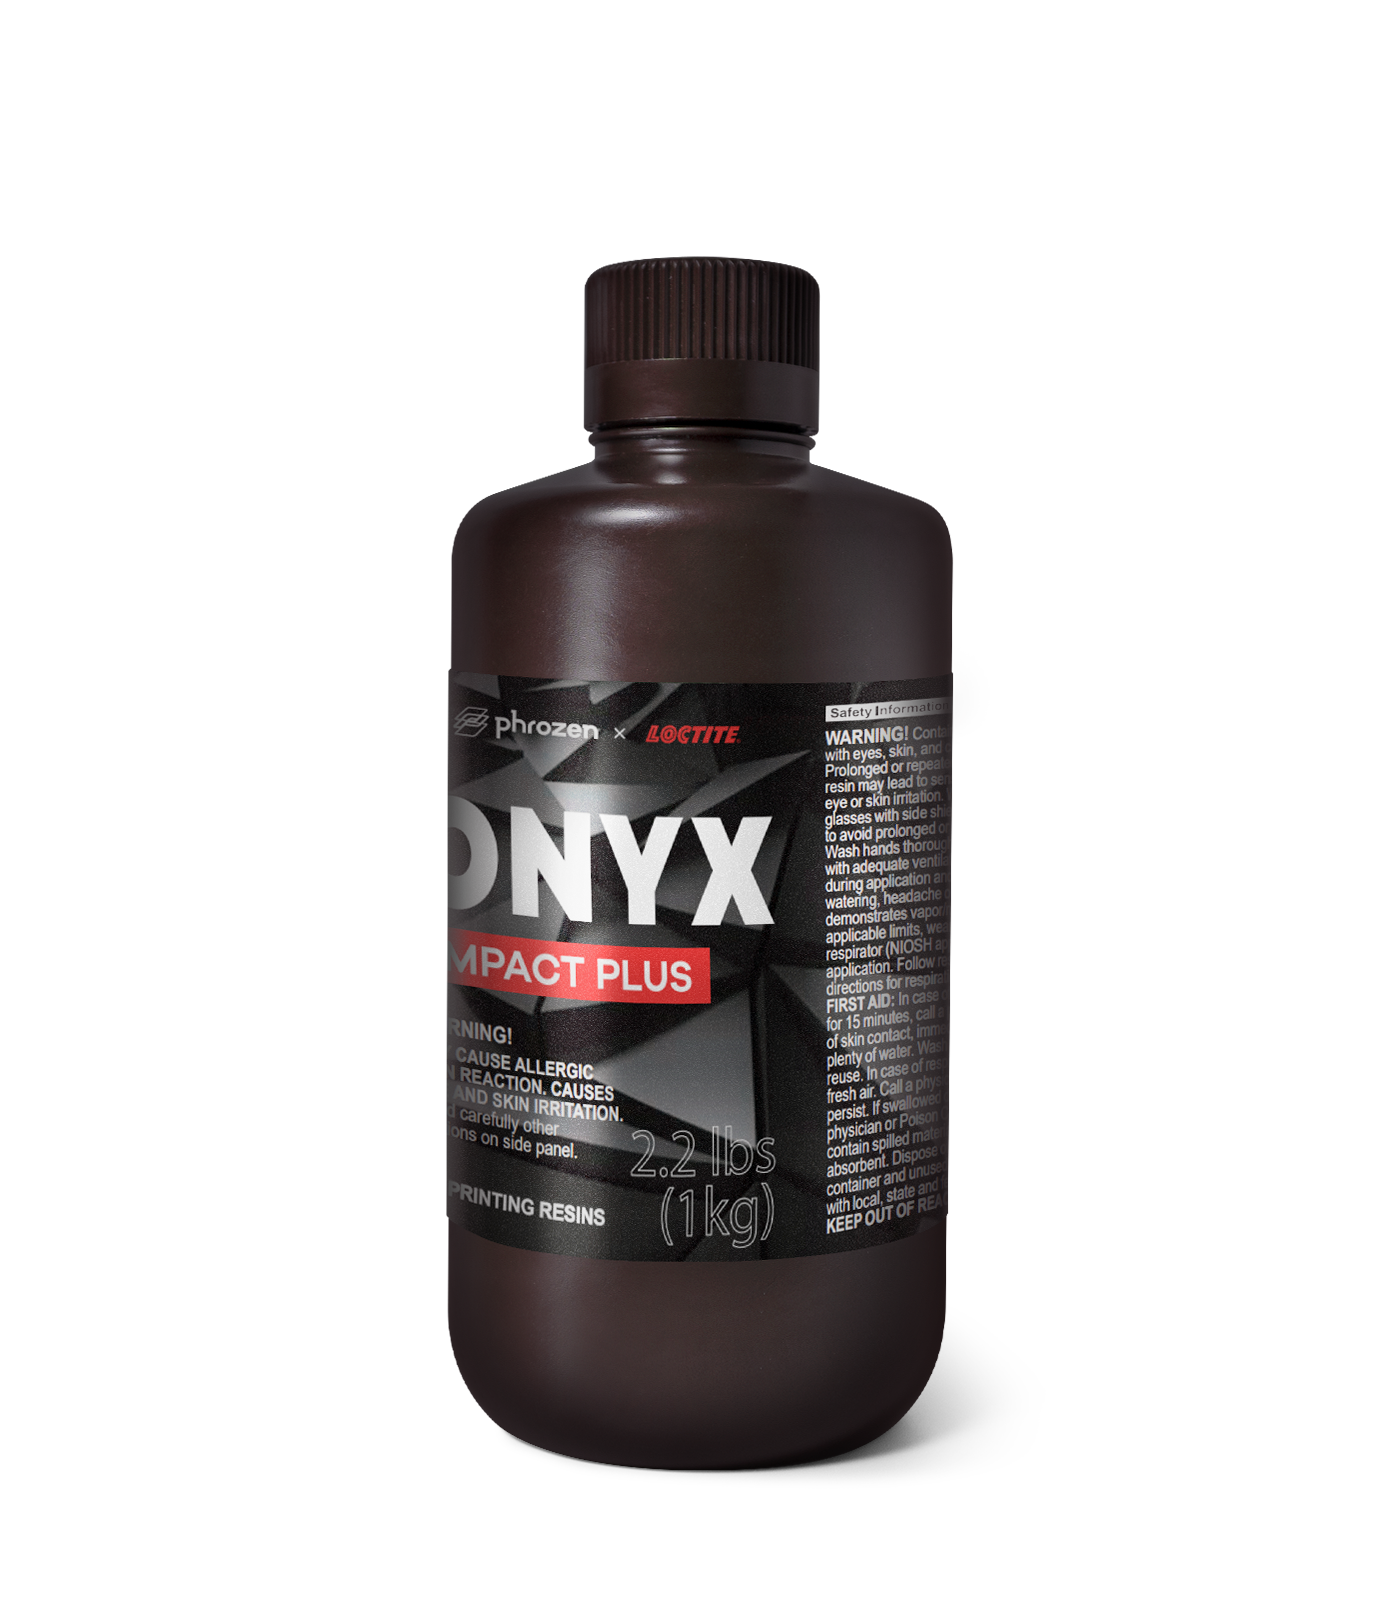 ONYX高耐衝擊樹脂